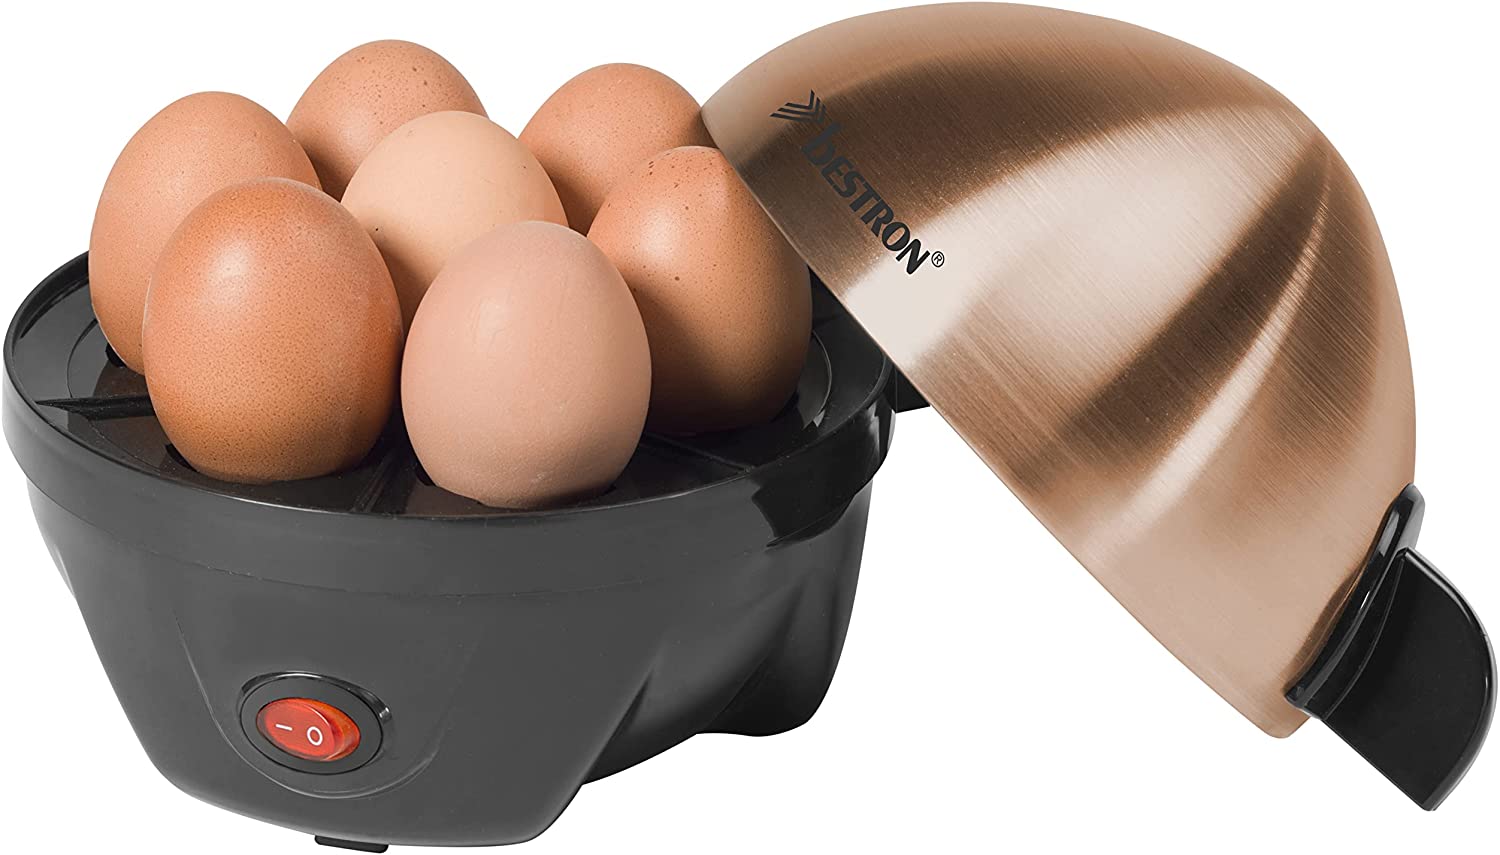 Bestron Breakfast Club Egg Cooker with Measuring Cup and Egg Piercer, 1-7 Eggs, 350 Watt, Black